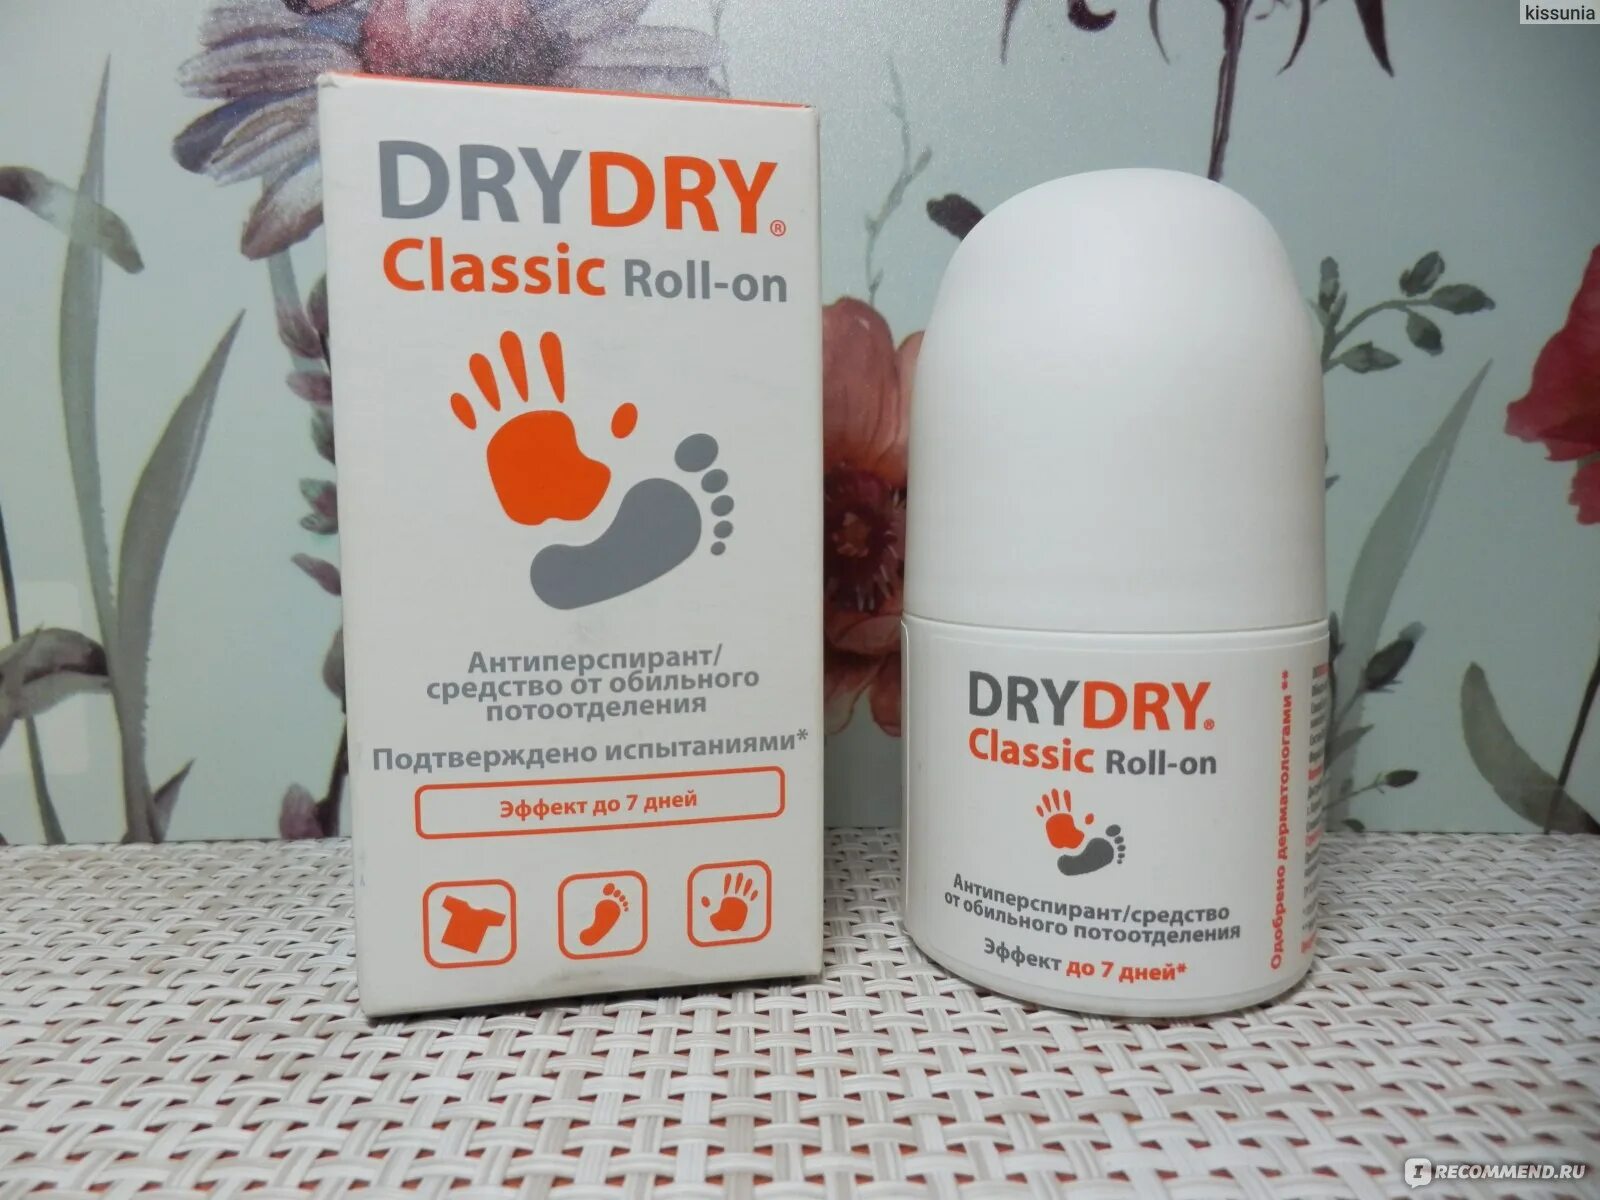 Dry dry дезодорант отзывы. Драй драй "Classic Roll-on" 35мл. Dry Dry антиперспирант. Дезодорант антиперспирант драй драй. Дезодорант Dry Dry Classic.